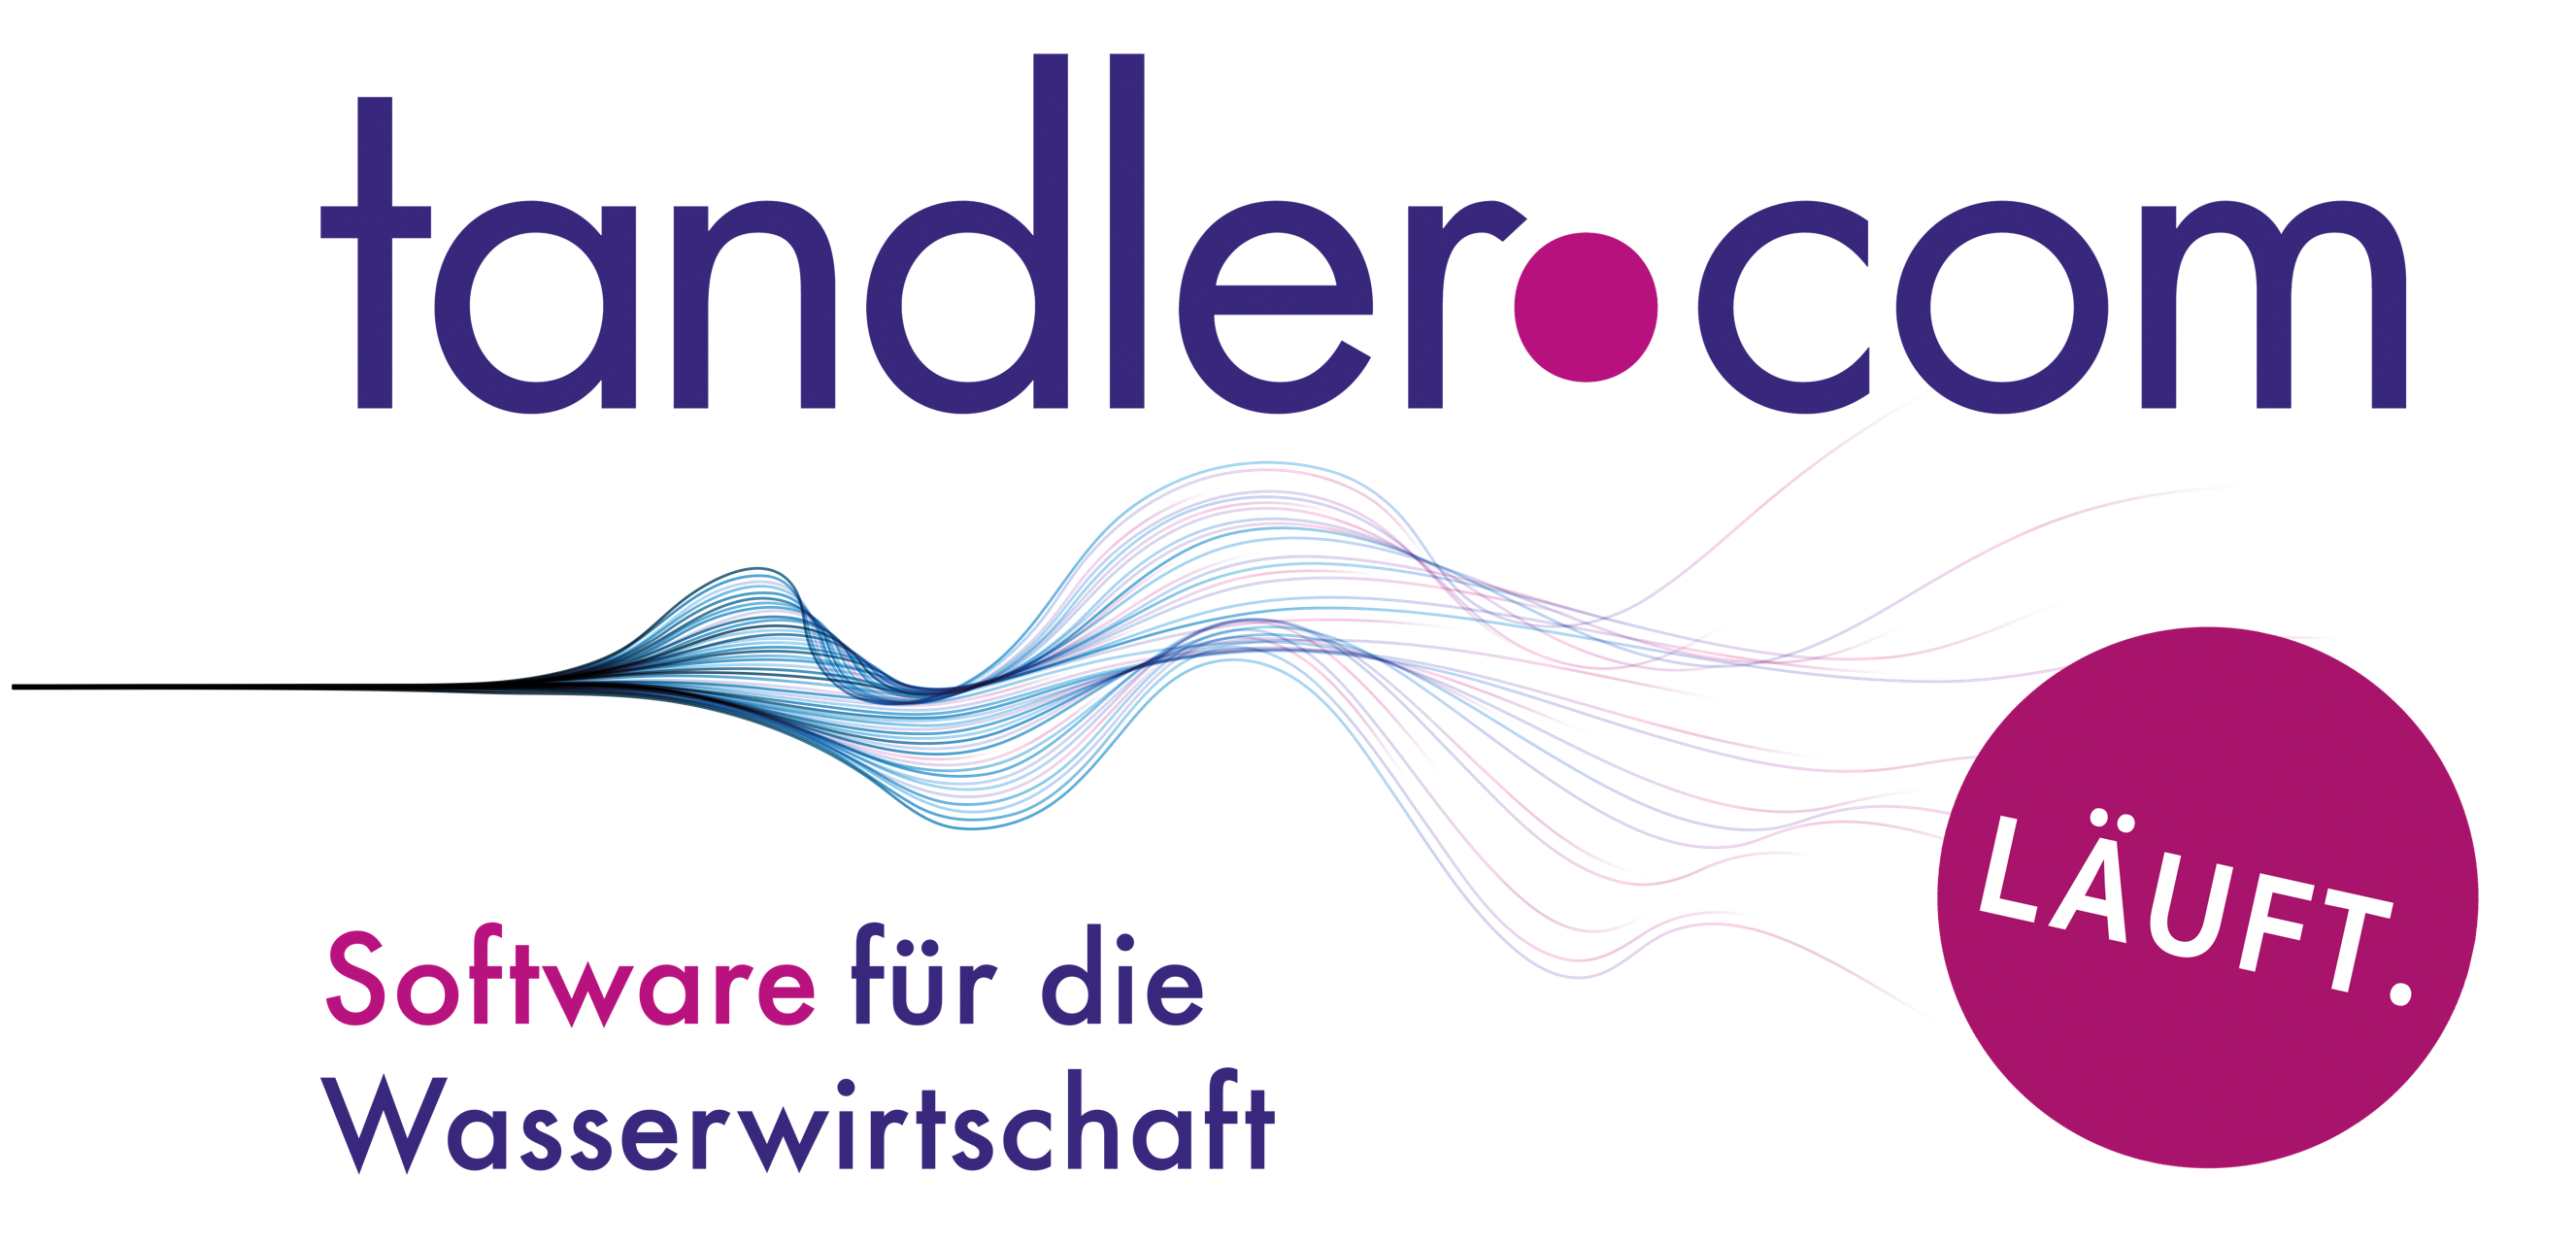 Tandler.com GmbH